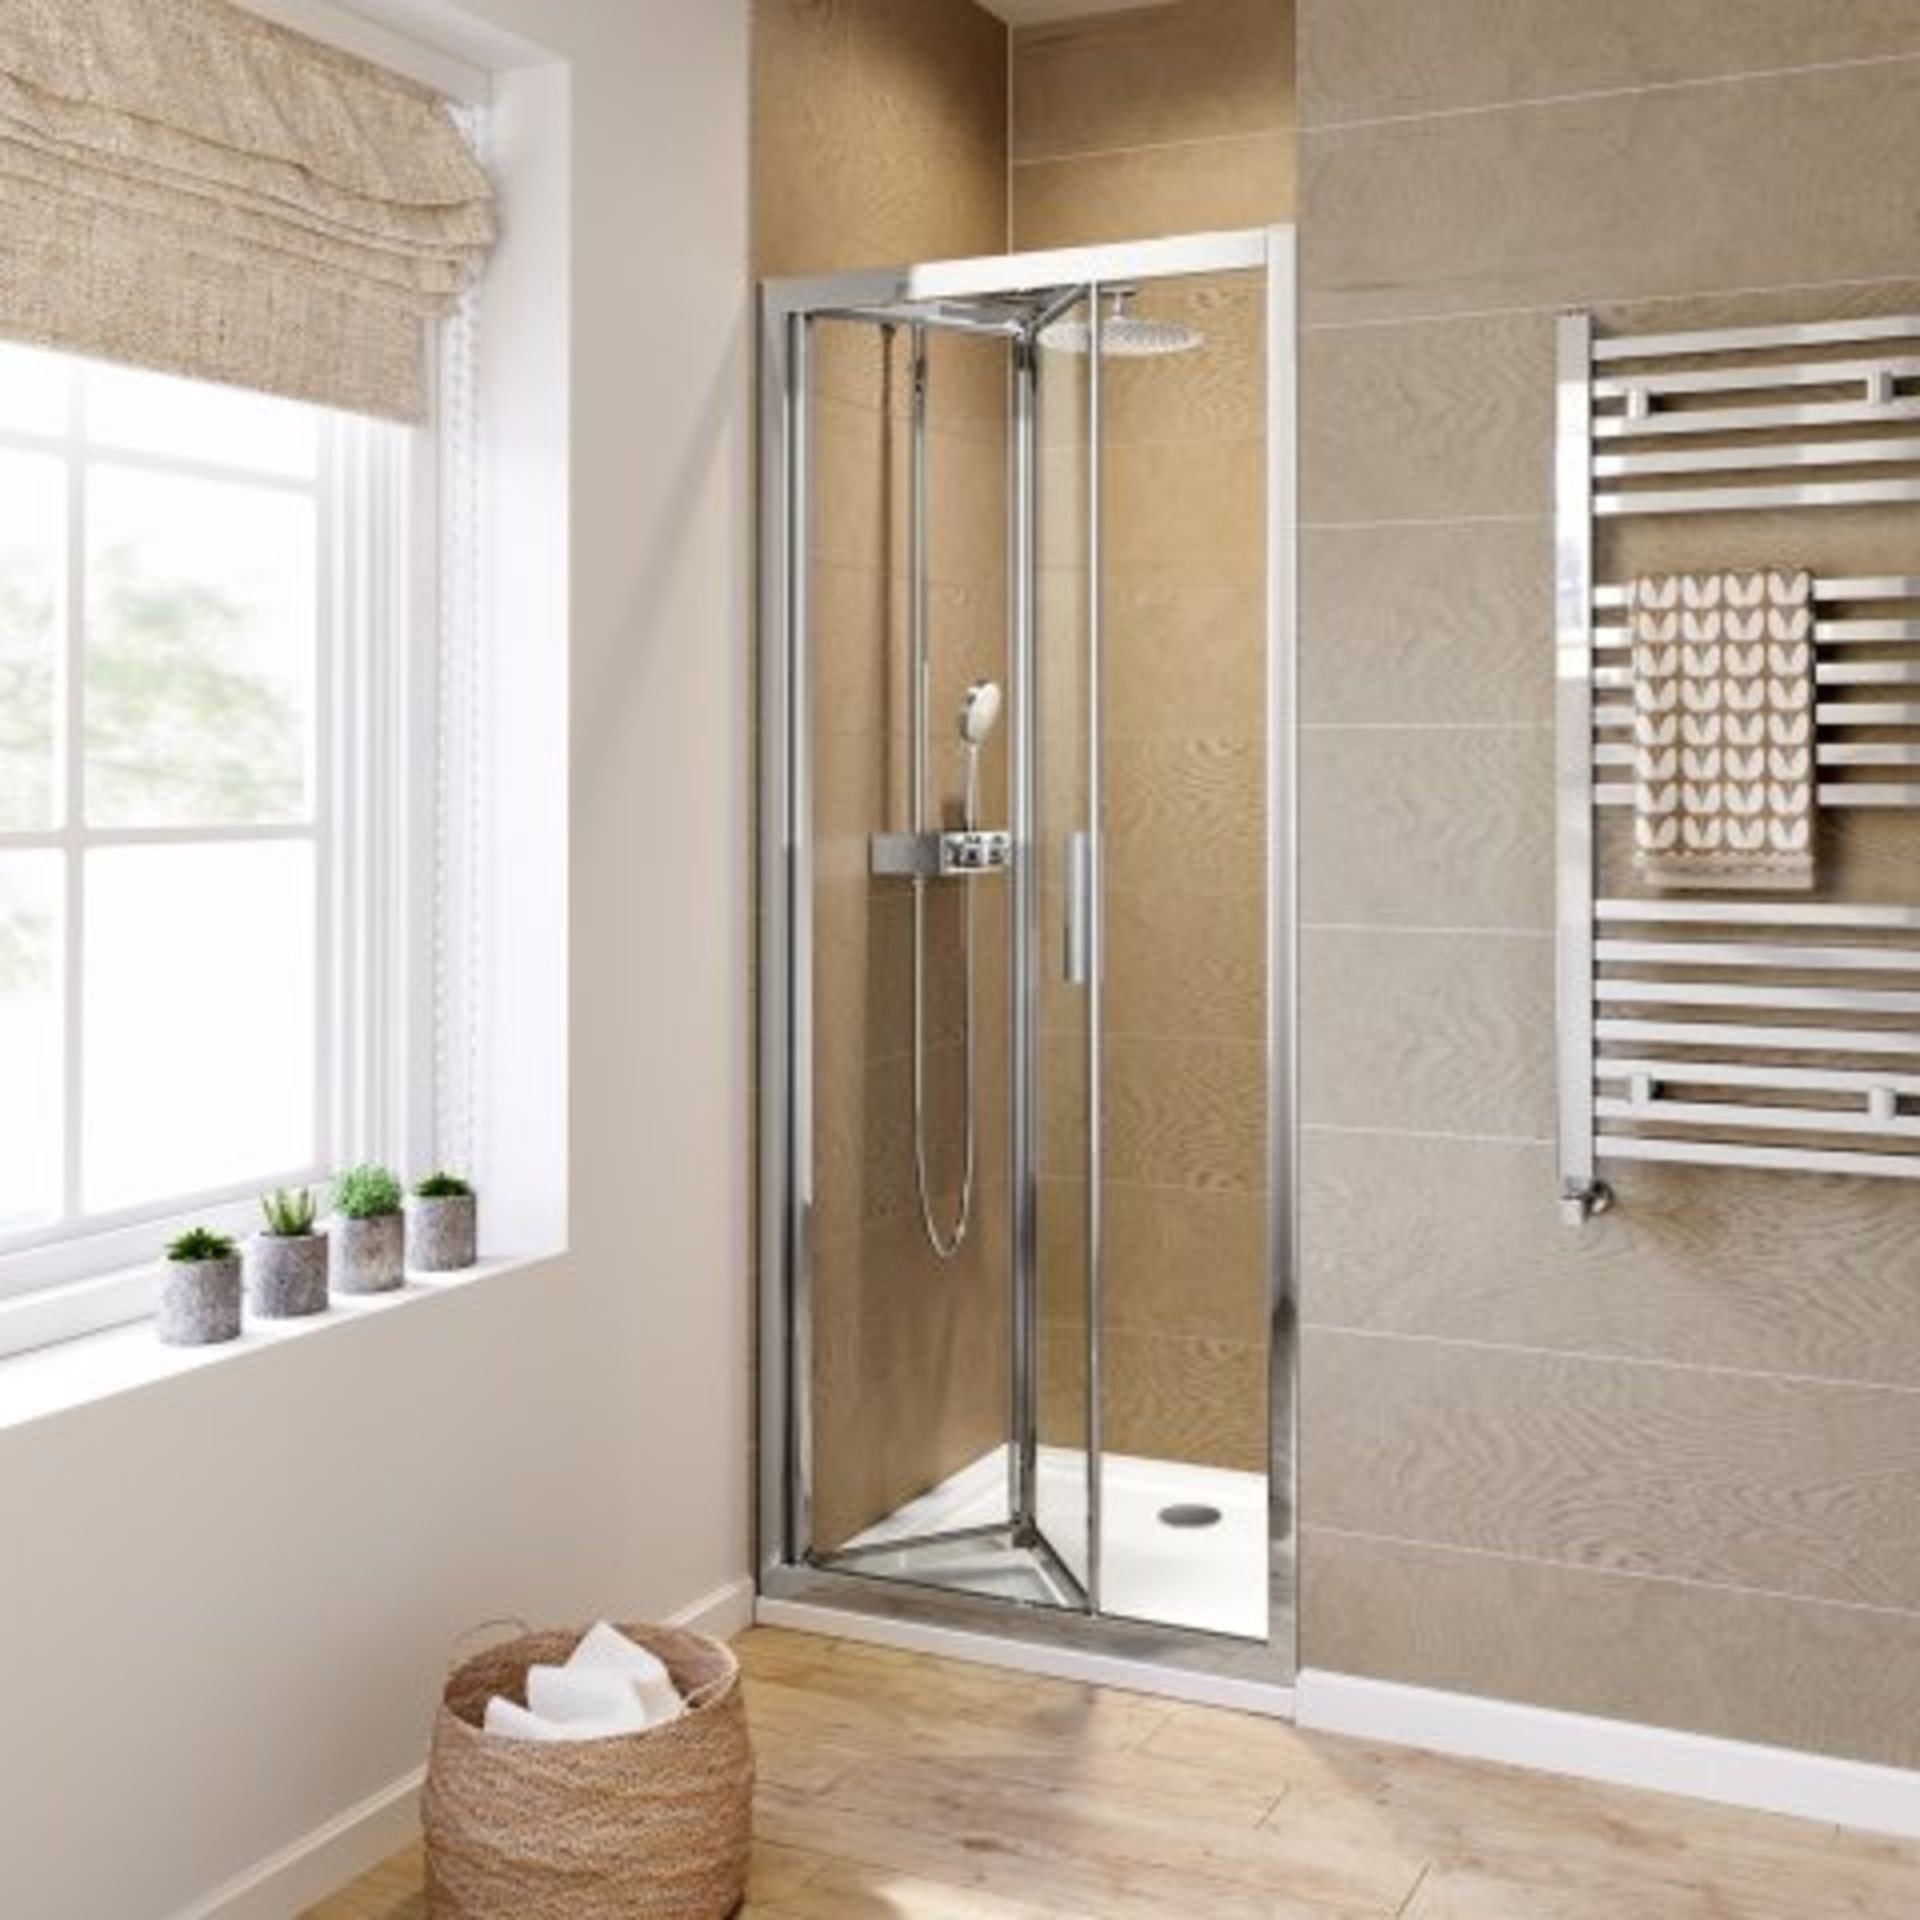 (K41) 900mm - 6mm - Elements EasyClean Bifold Shower Door. RRP £299.99. Essential Design Our - Image 4 of 4